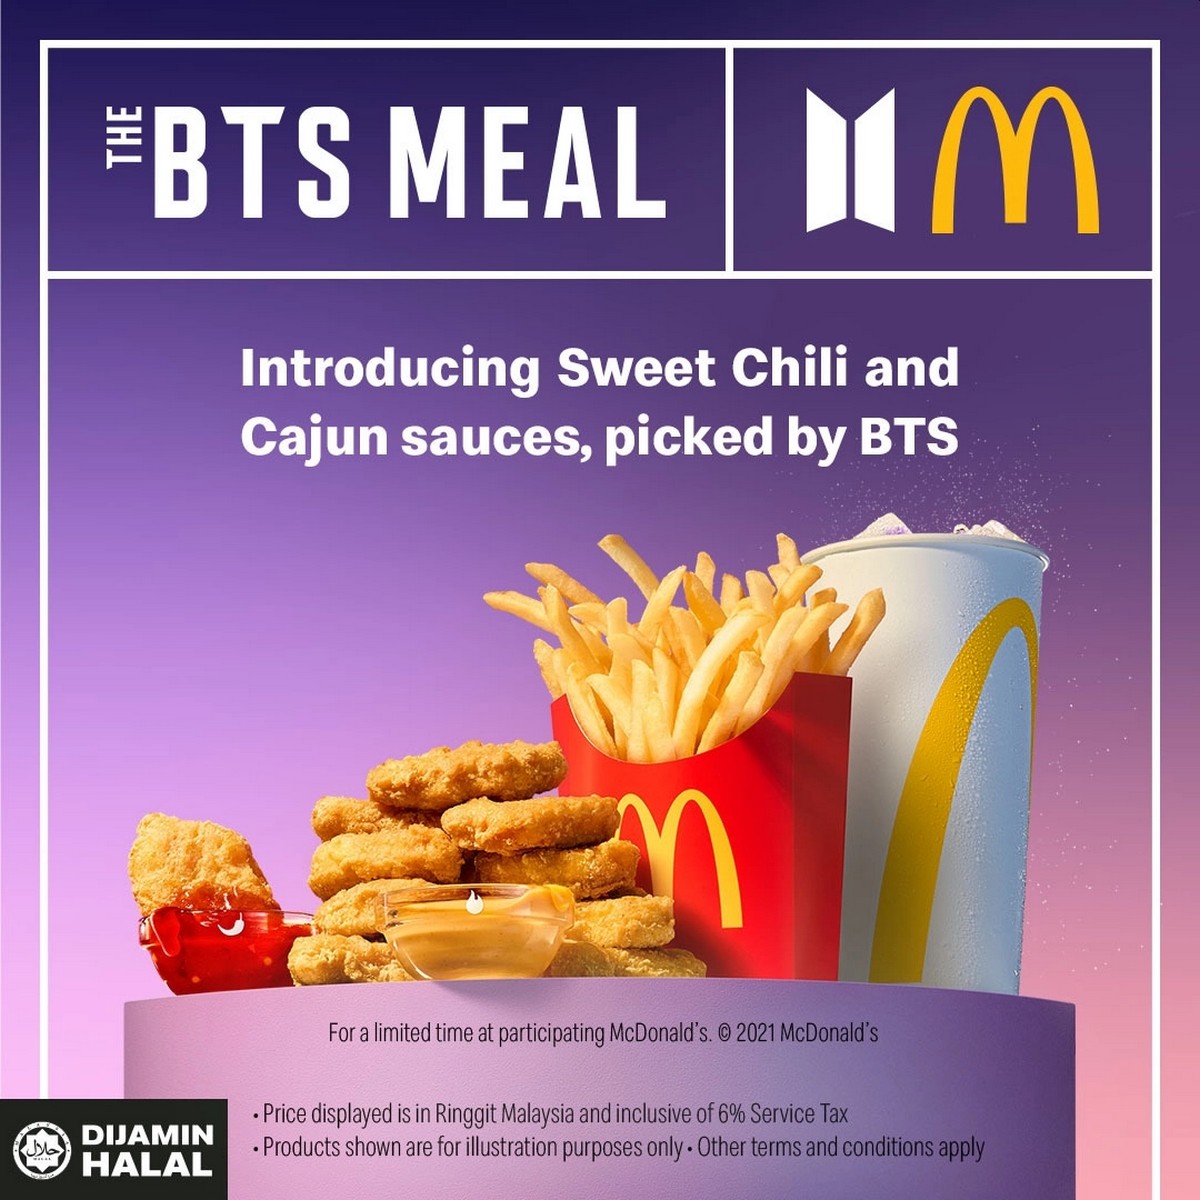 210526-McDonalds-Malaysia-BTS-meal - LifeStyle 